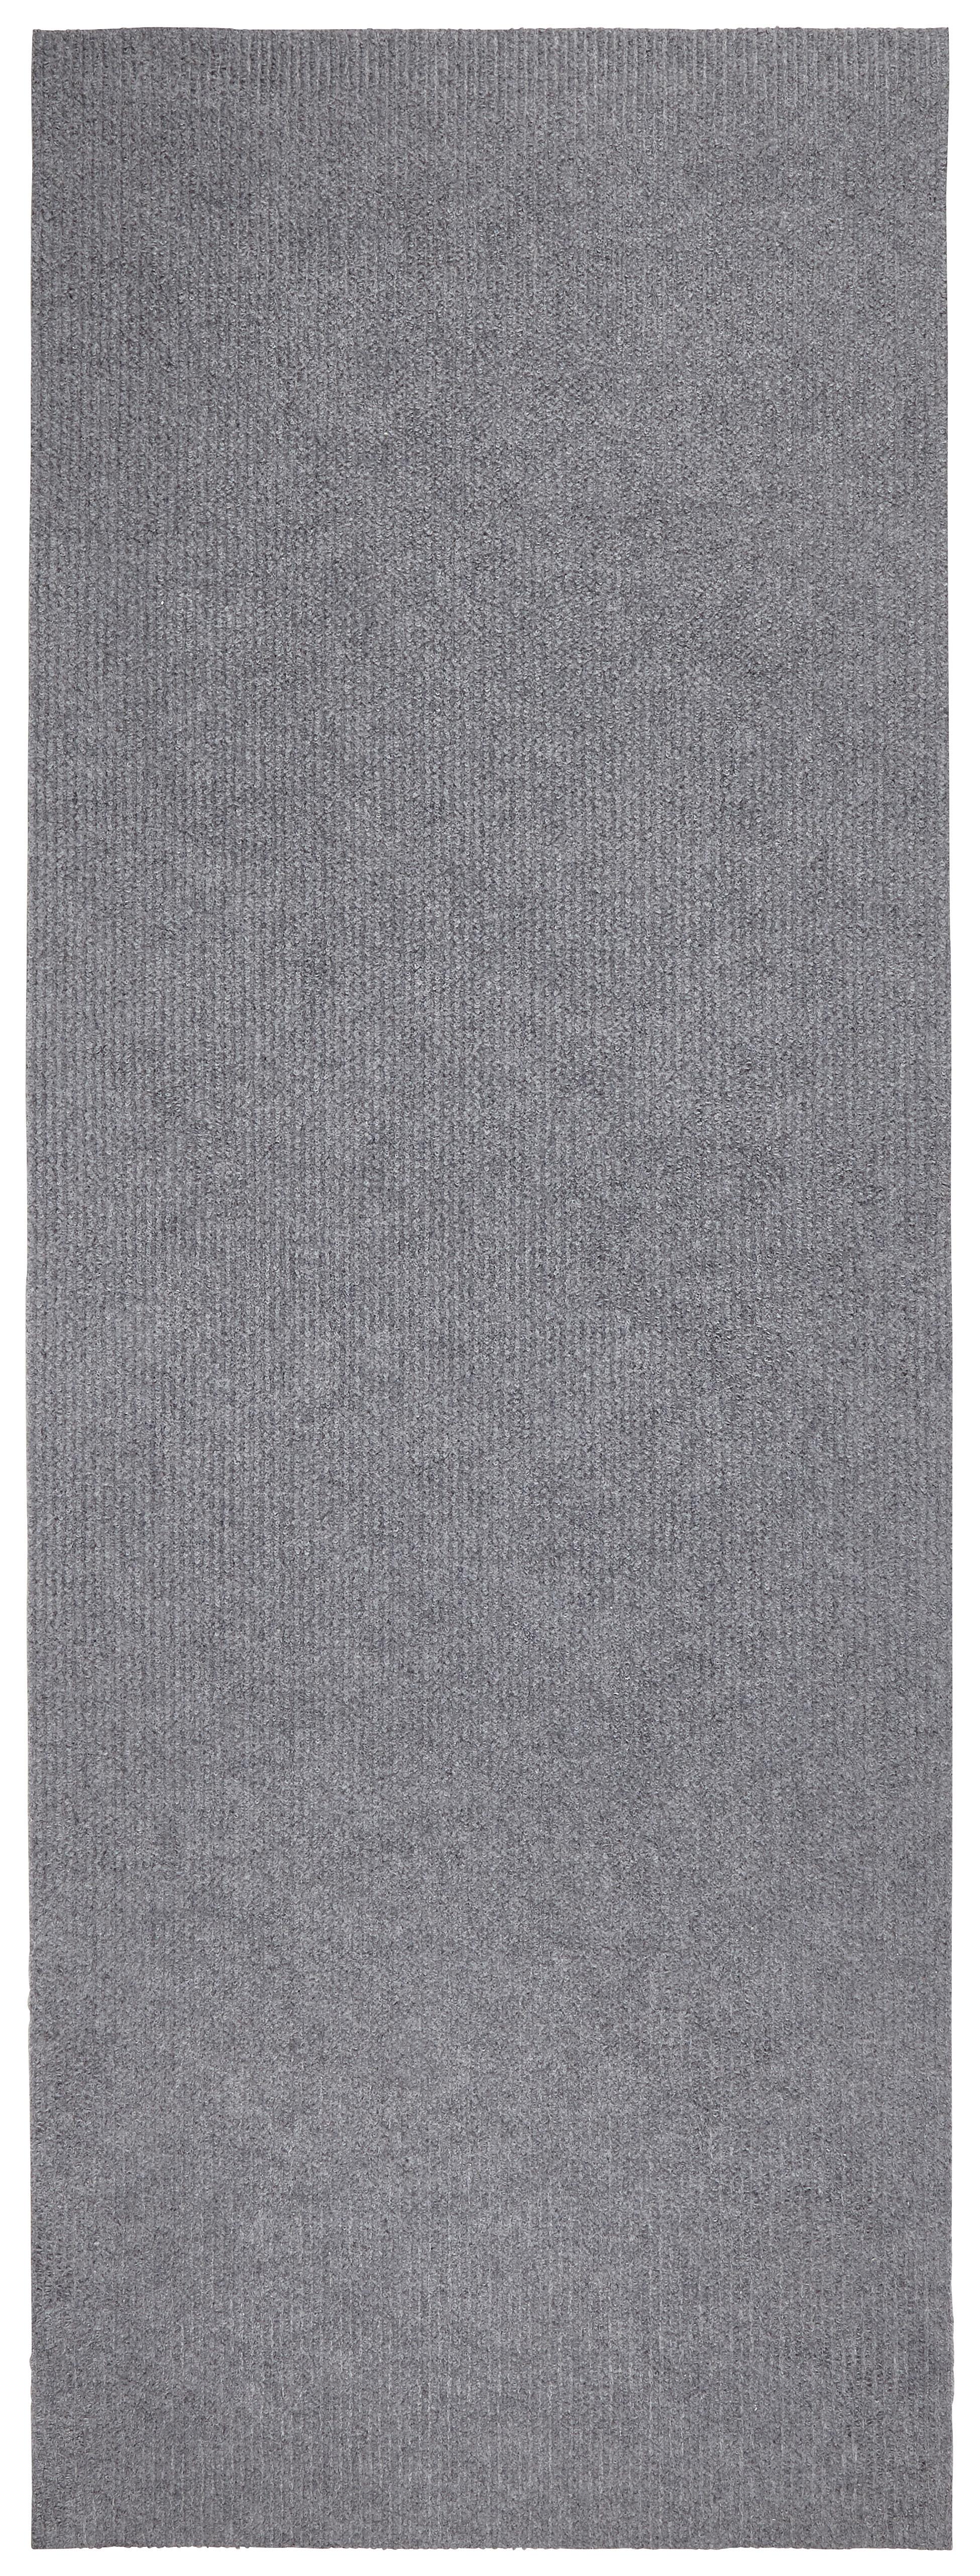 Läufer Niki in Grau ca. 66x180cm - Multicolor, KONVENTIONELL, Textil (66/180cm) - Modern Living